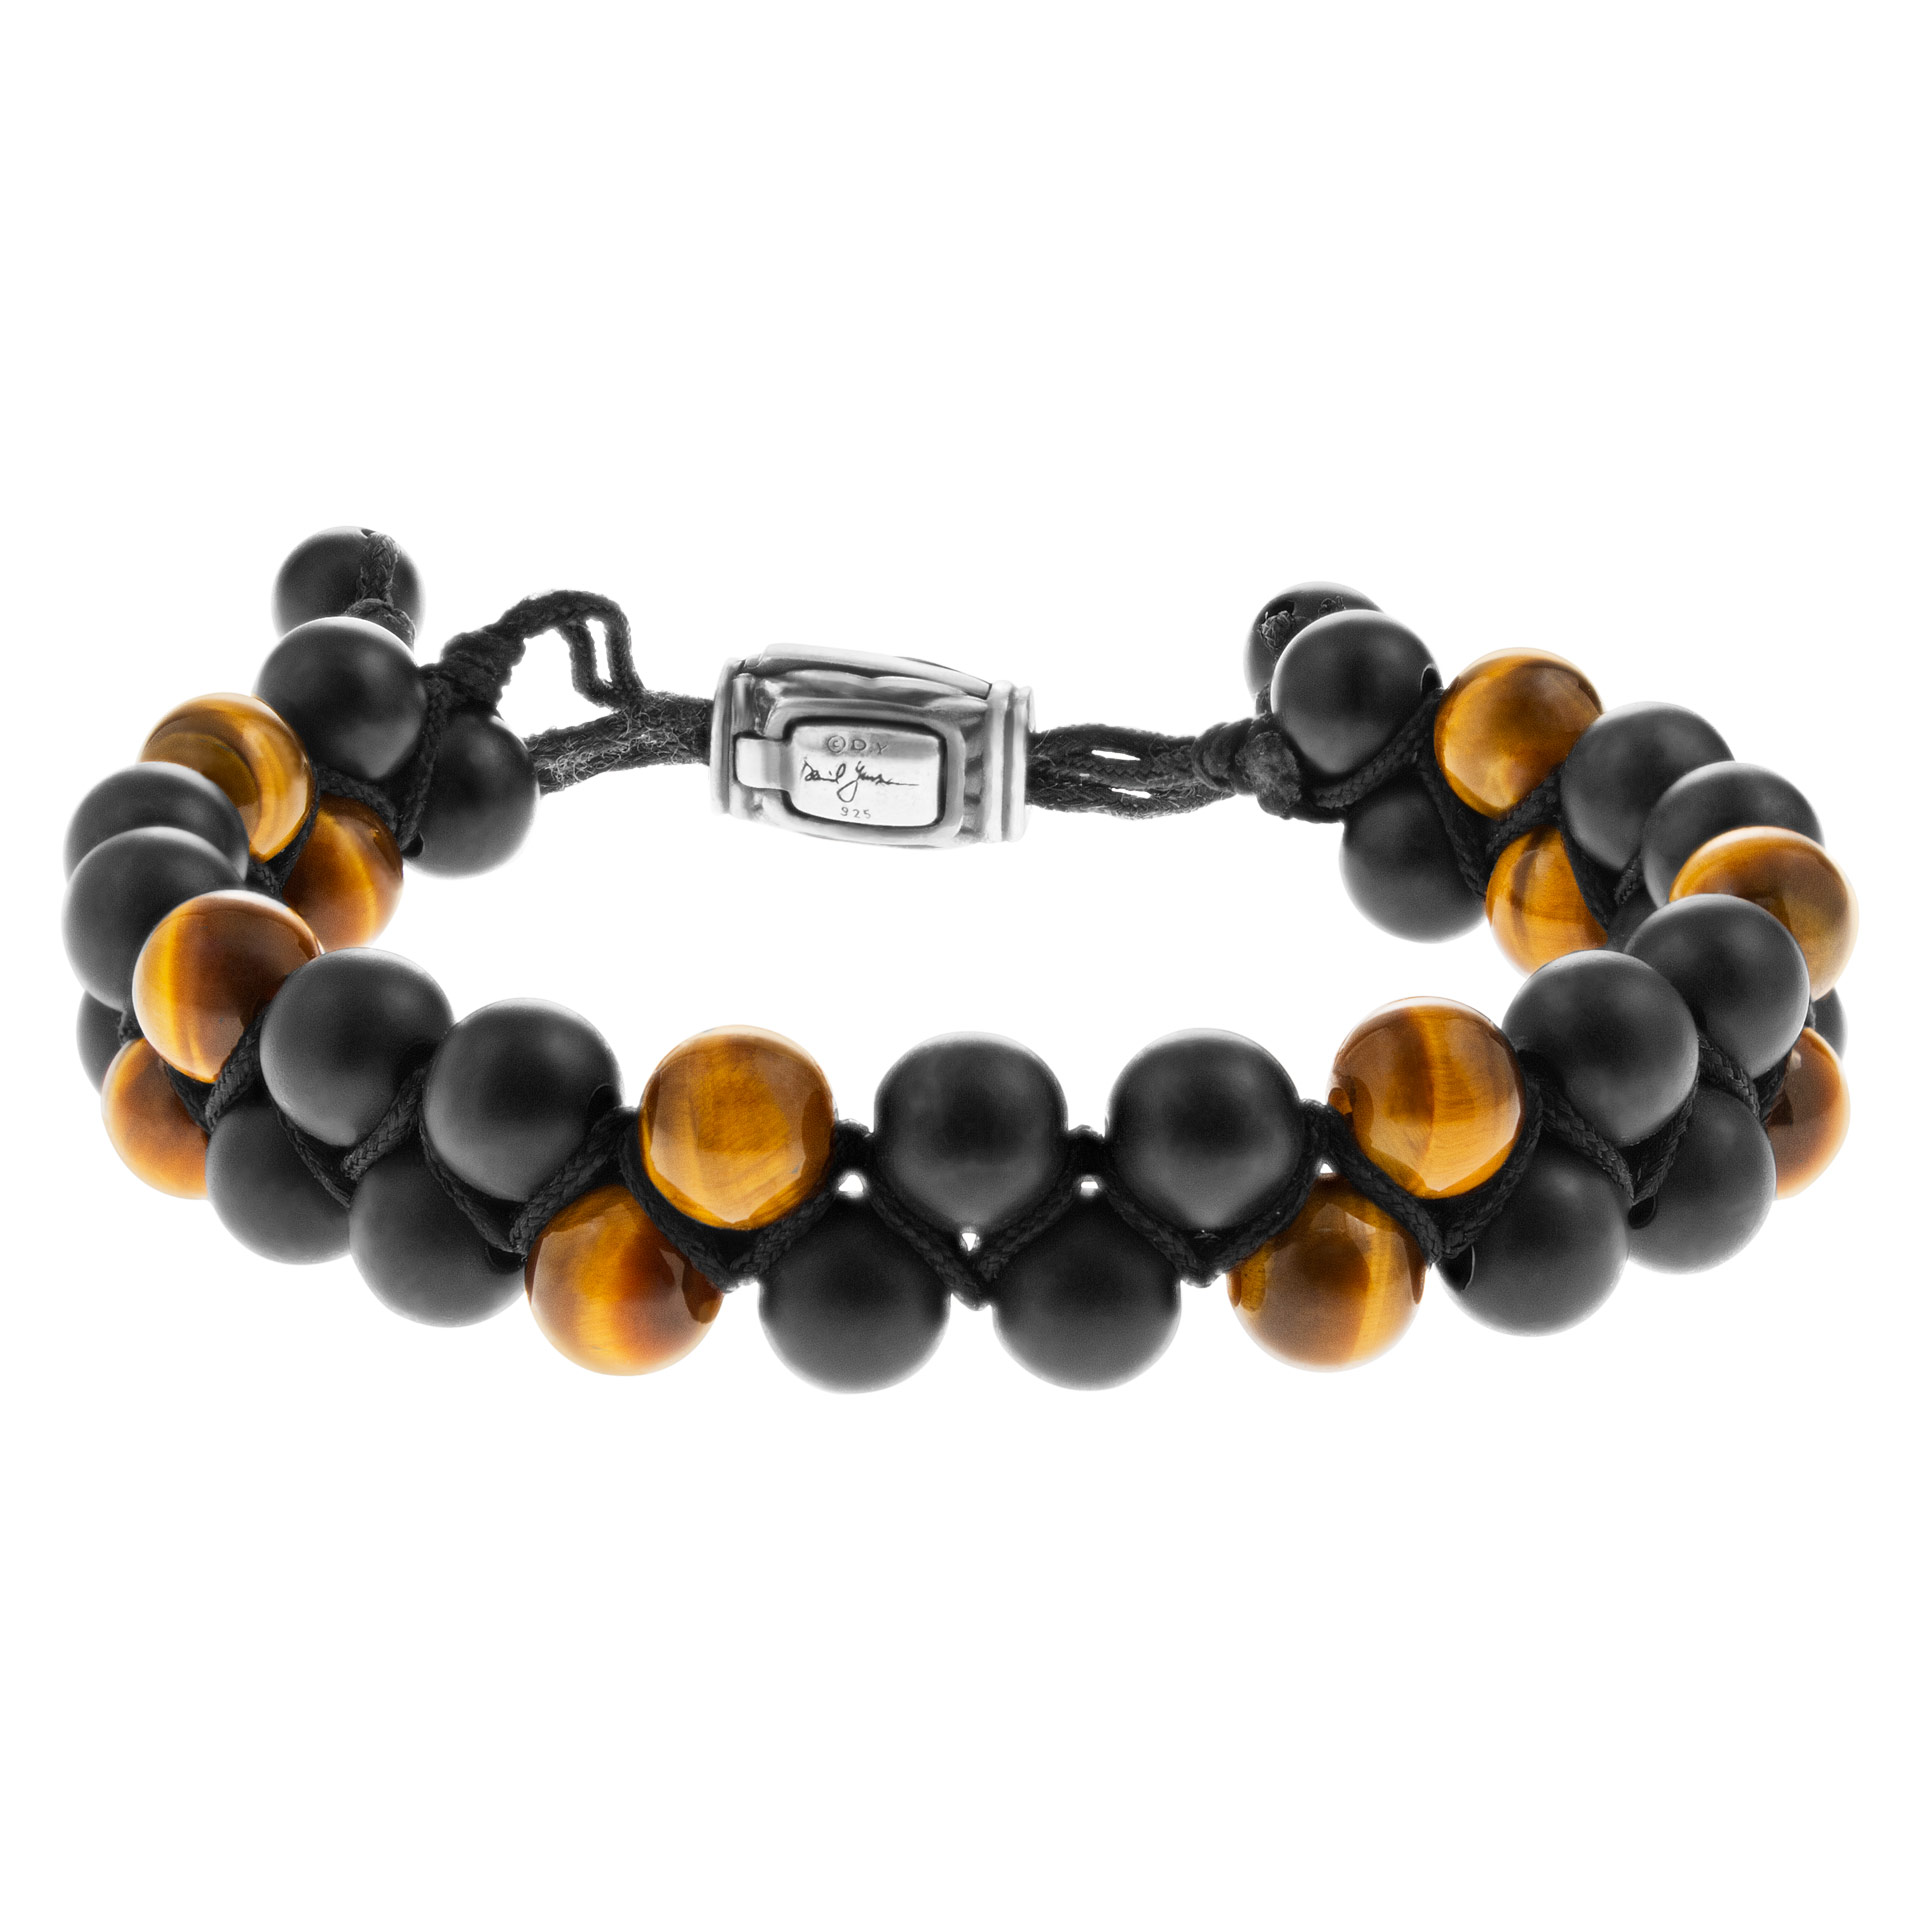 David Yurman spiritual beads two-row bracelet w/Black Onyx & Tiger's Eye image 1